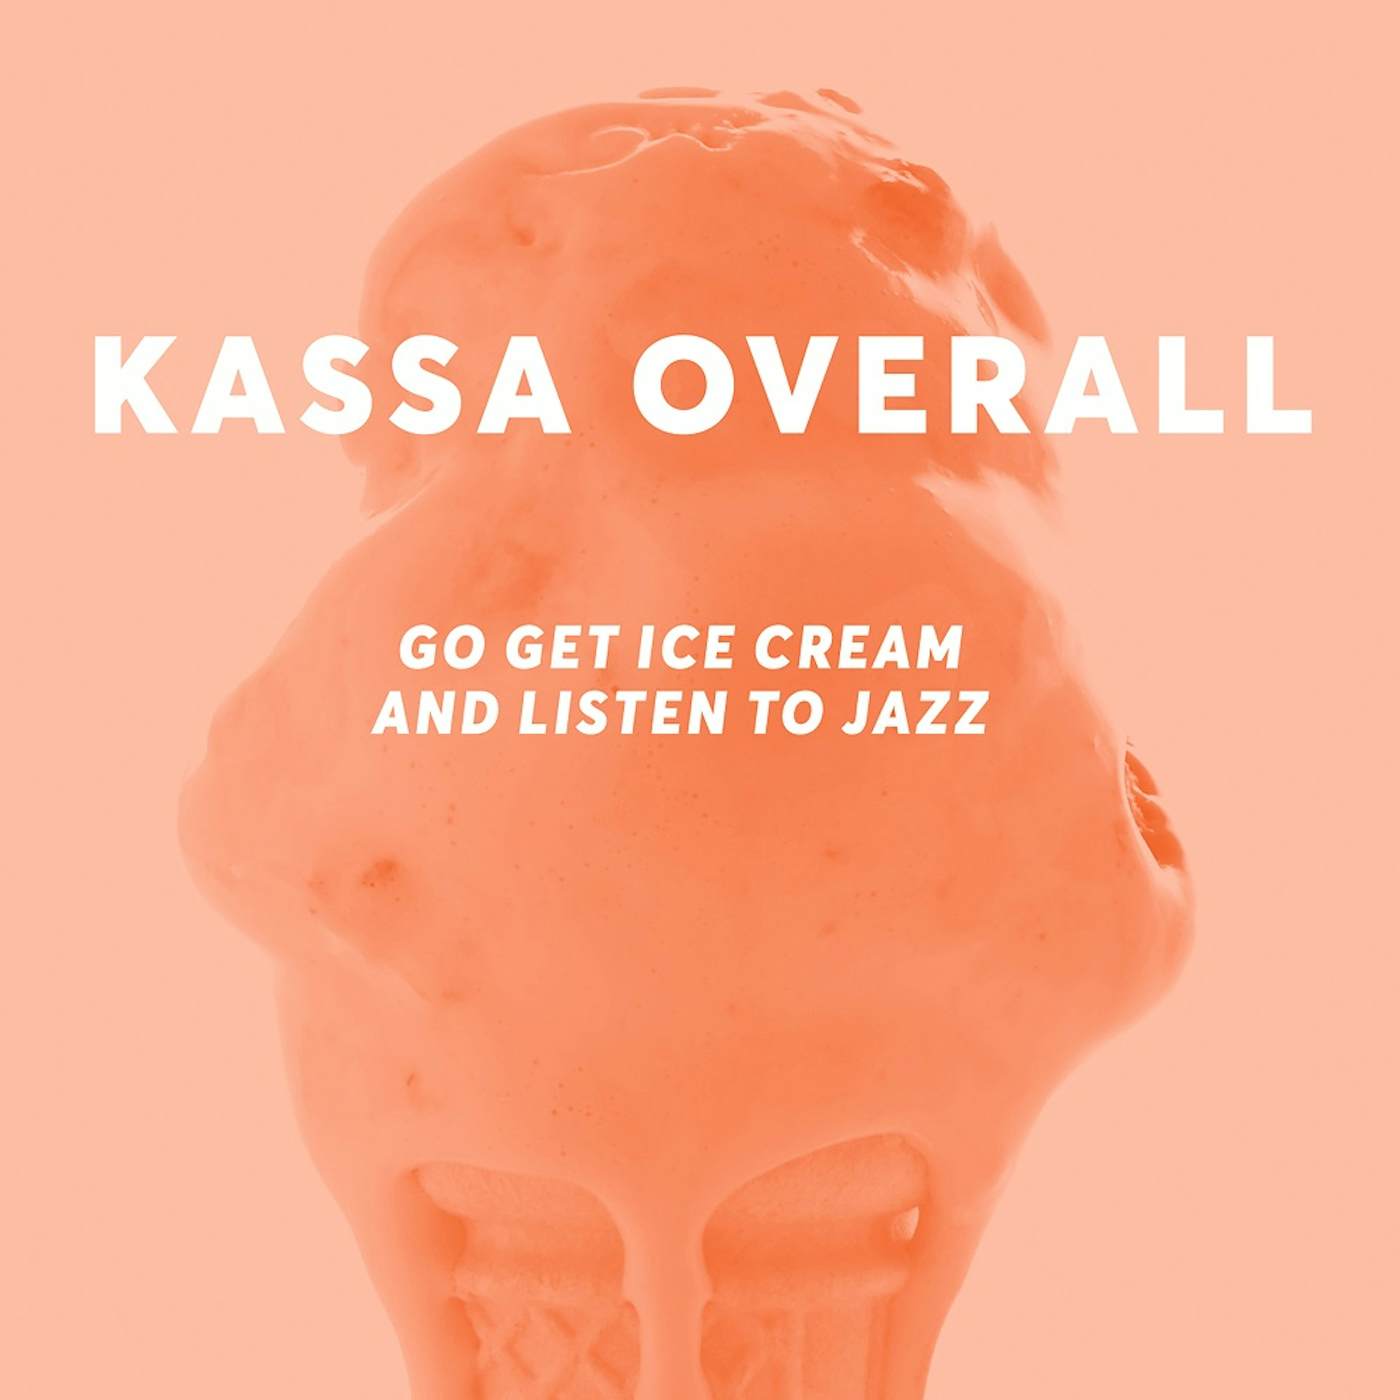 Kassa Overall Go Get Ice Cream and Listen to Jazz Vinyl Record